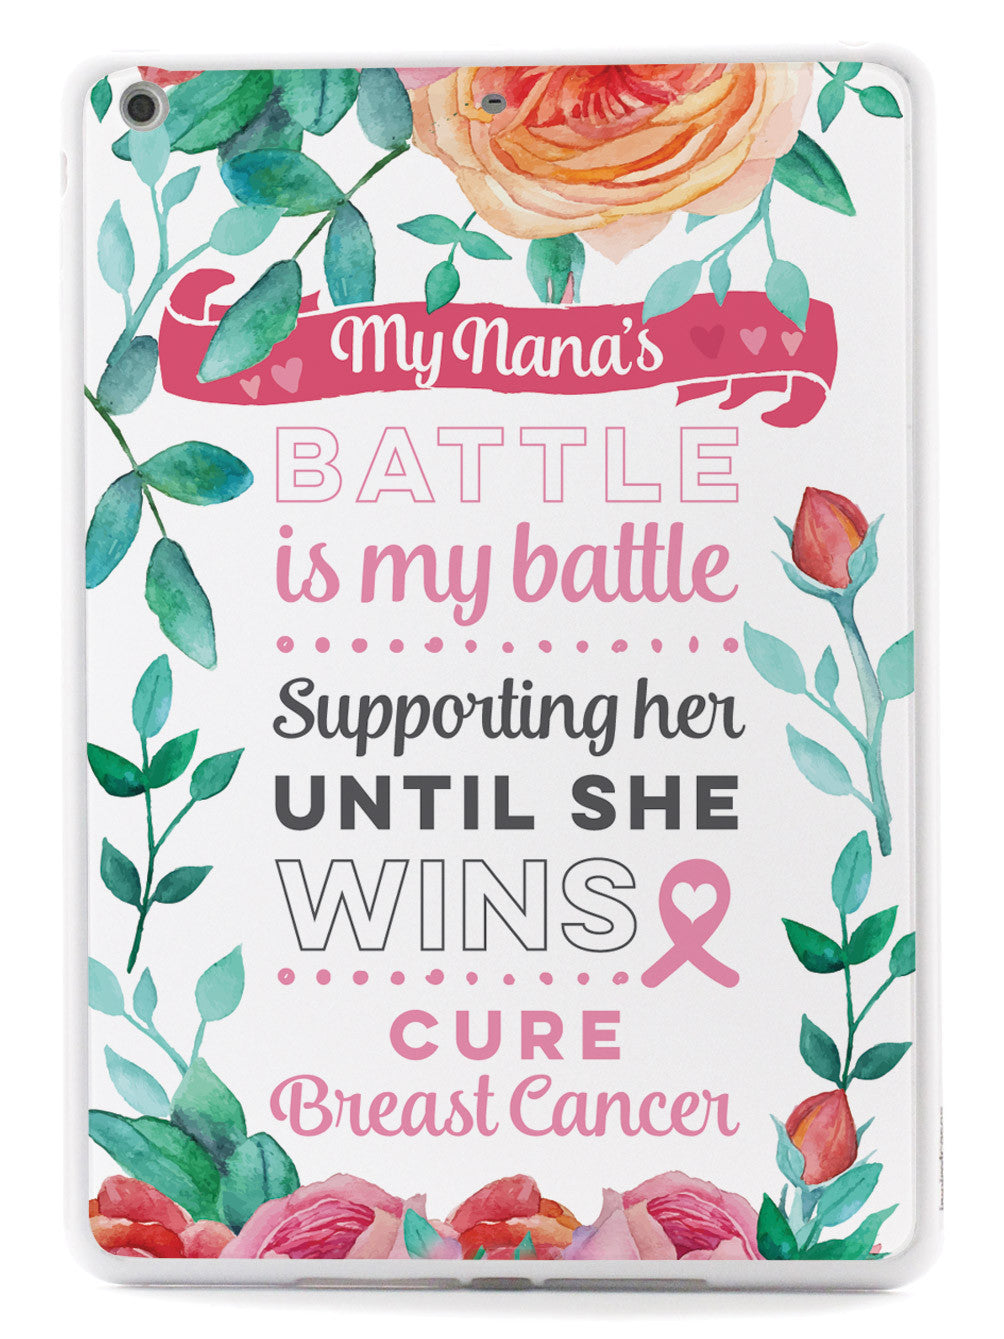 My Nana's Battle - Breast Cancer Awareness Case